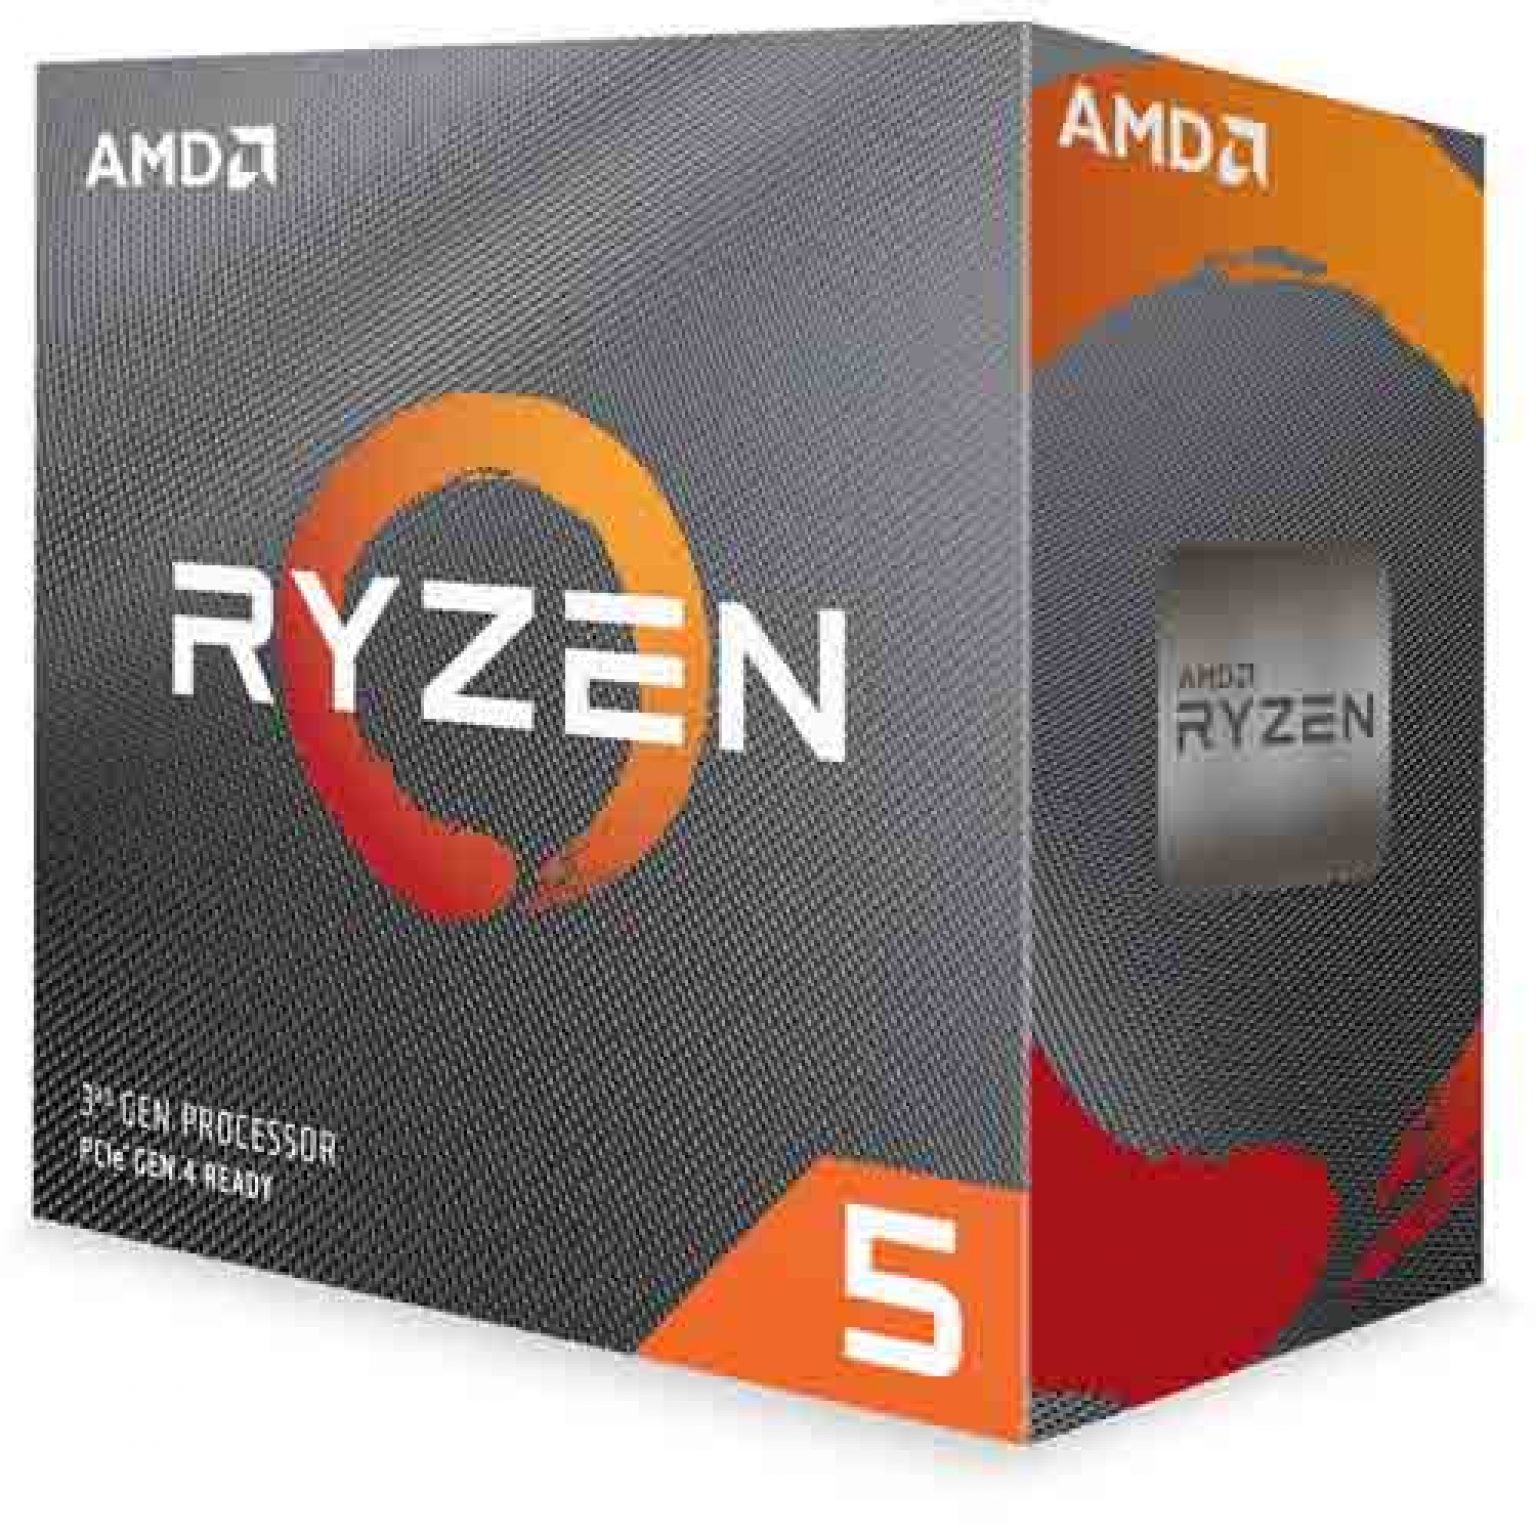 AMD Ryzen 3 2200G Price in Pakistan 2020 - Compare Online - Compareprice.pk